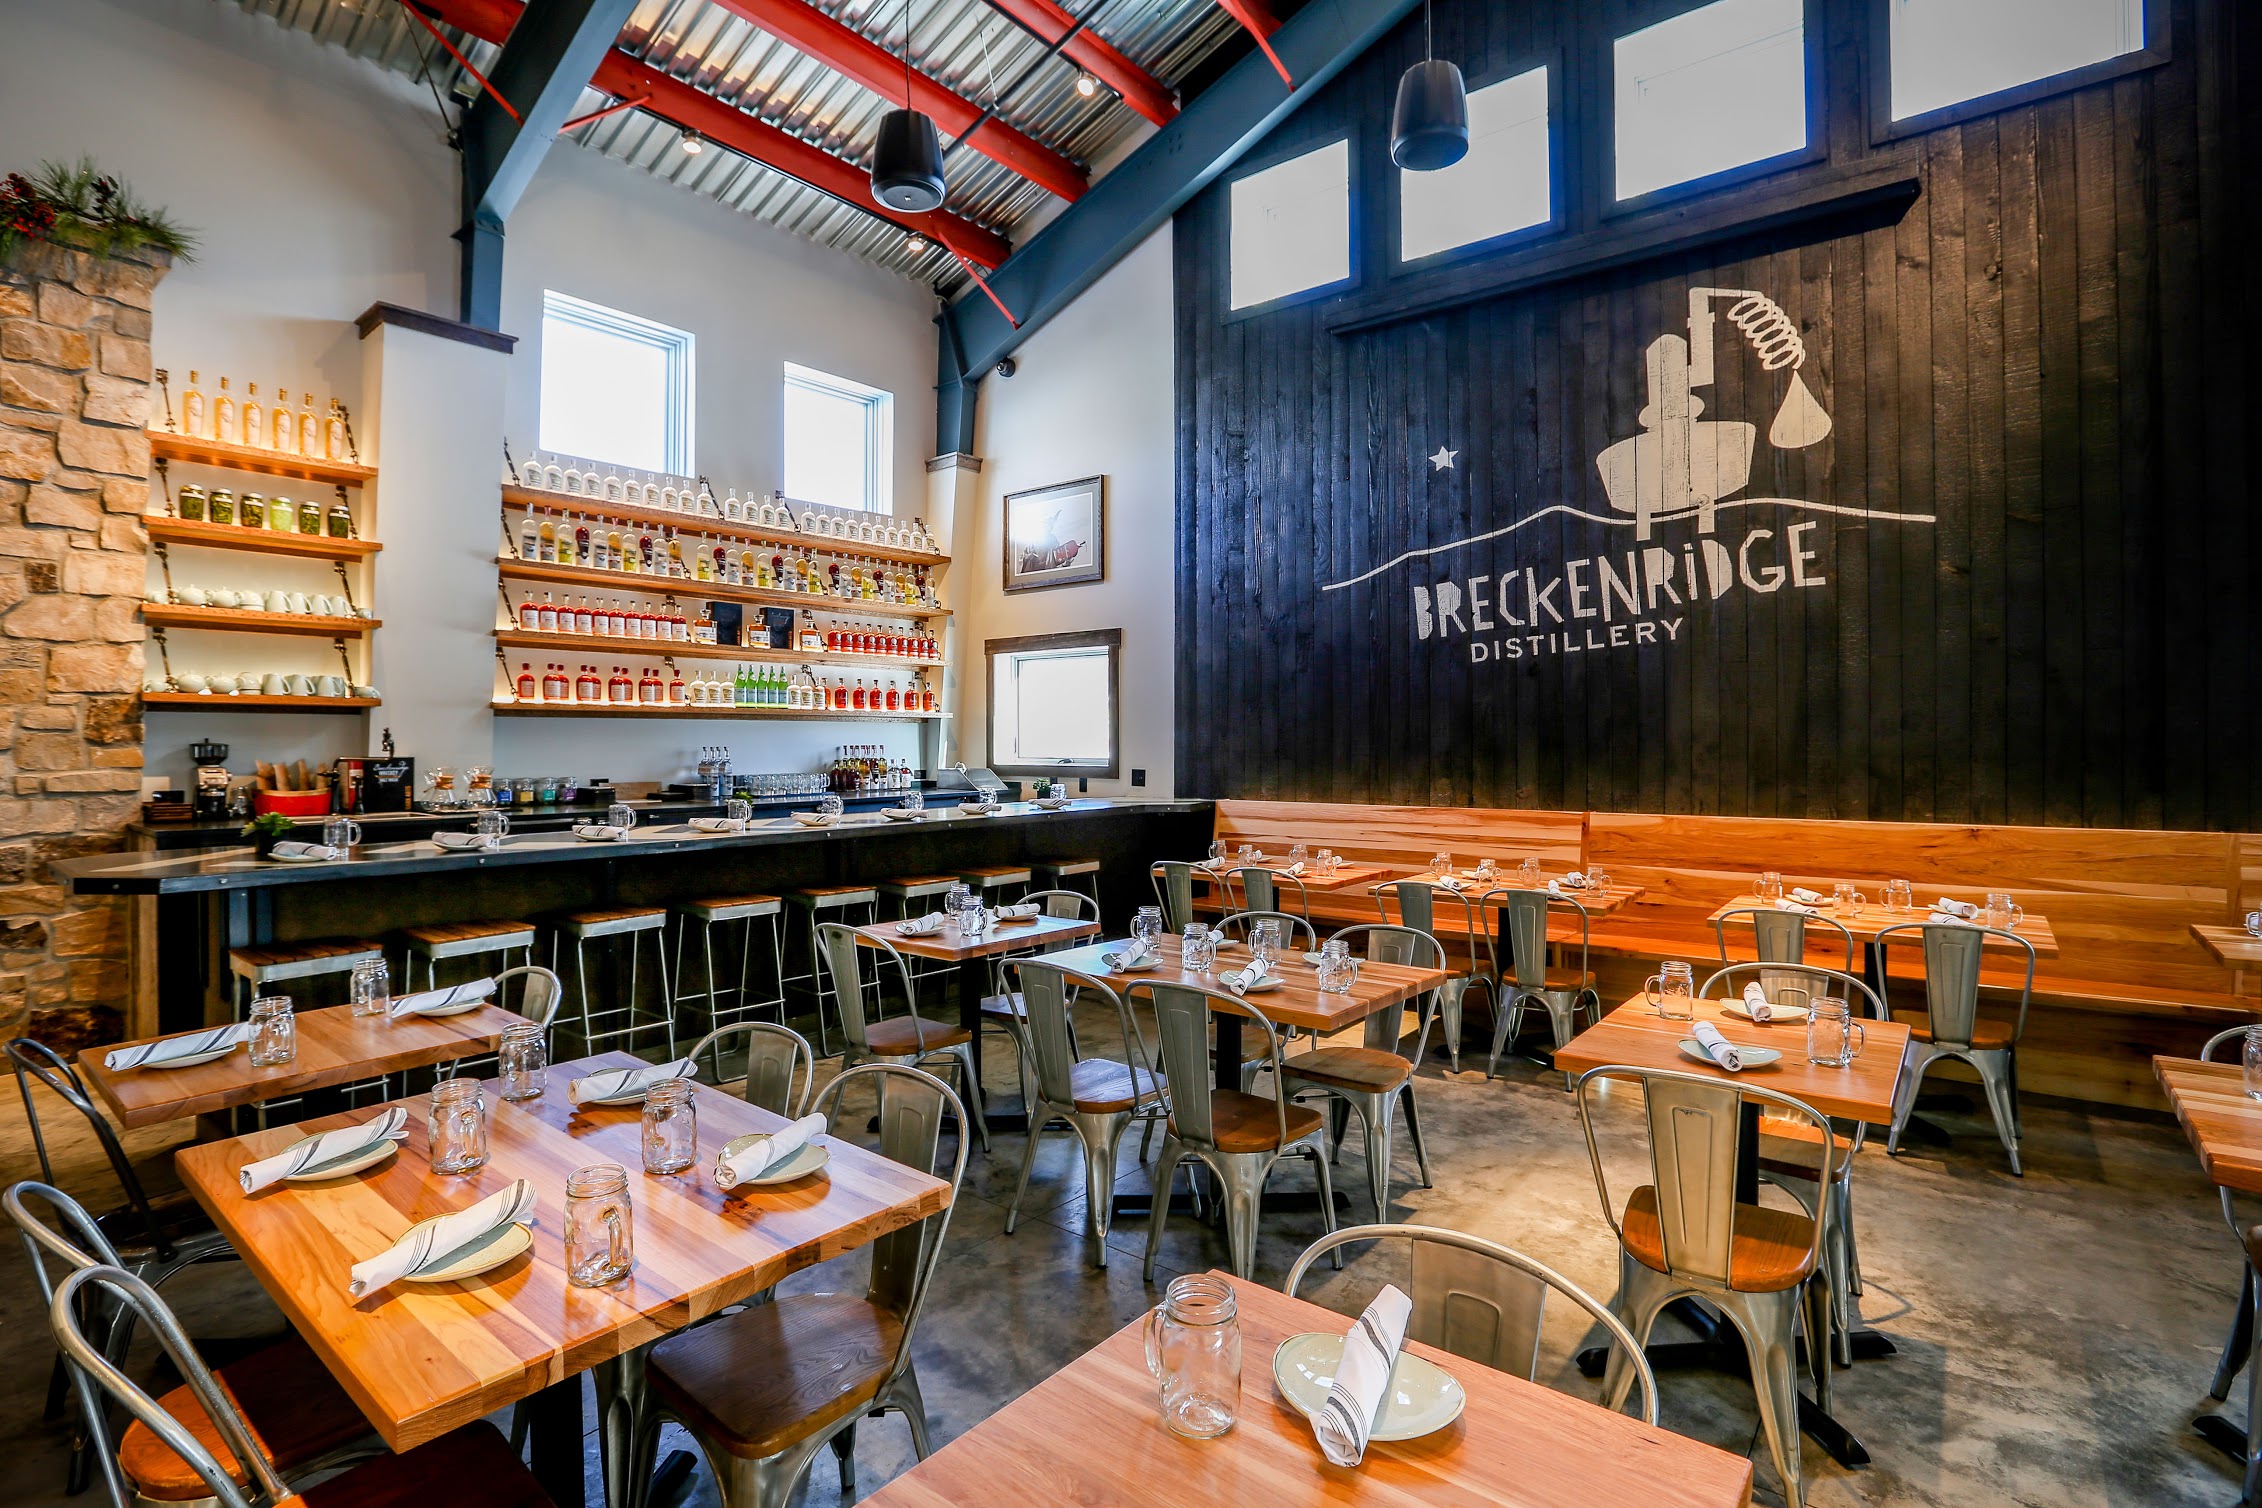 Breckenridge Distillery Restaurant Releases New Menu by David Burke